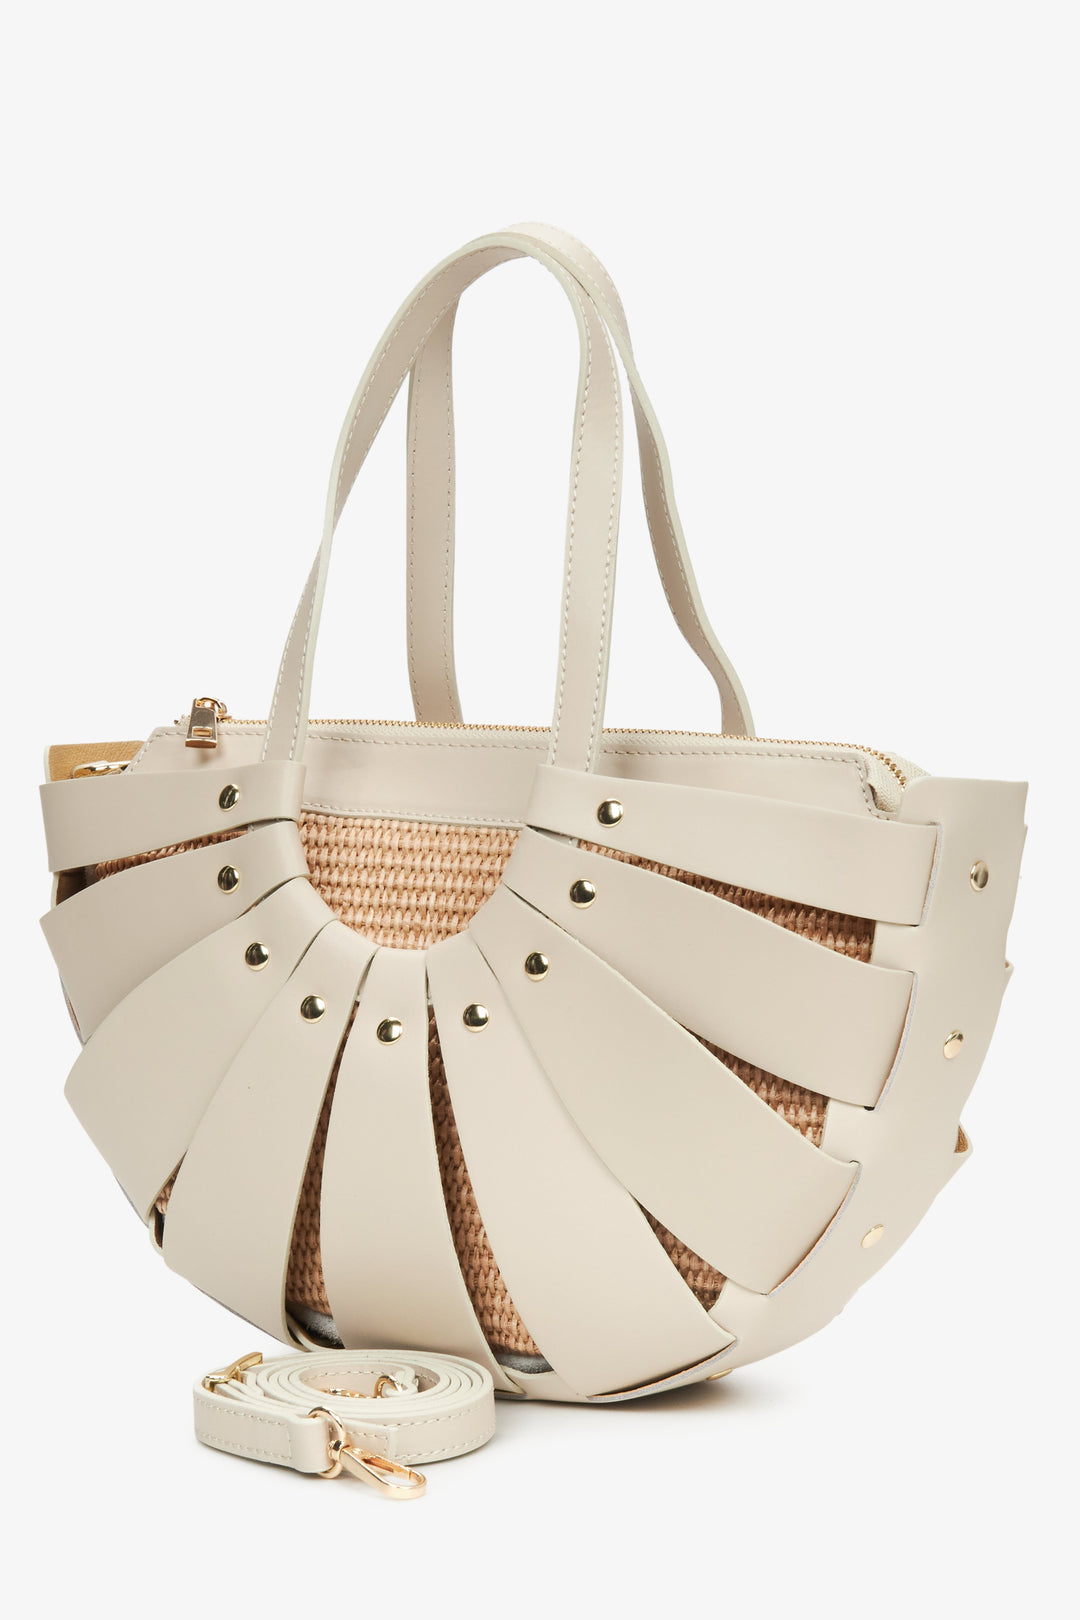 Estro beige leather women's basket handbag.